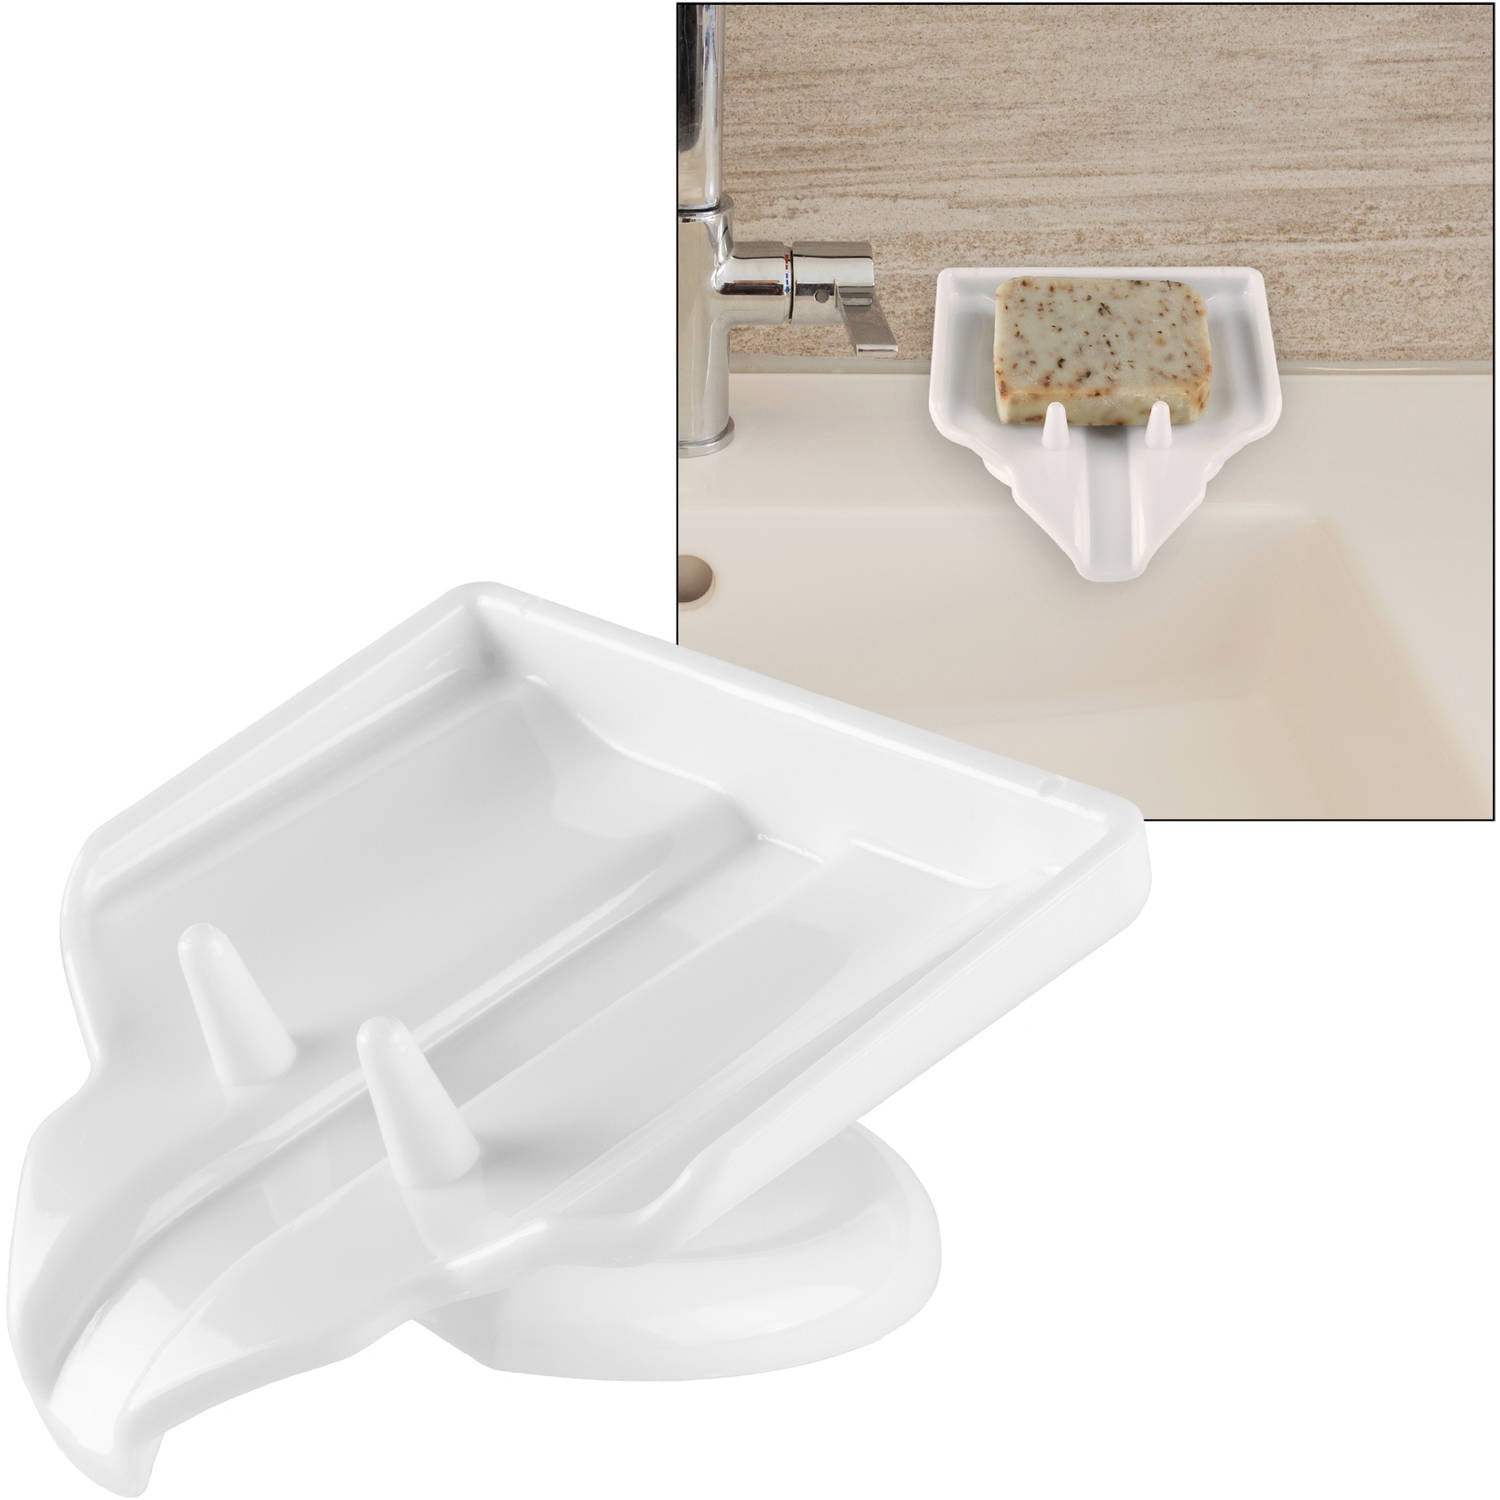 Kitchen Sink InterDesign Lineo Bar Soap Dish for Bathroom Vanities Red